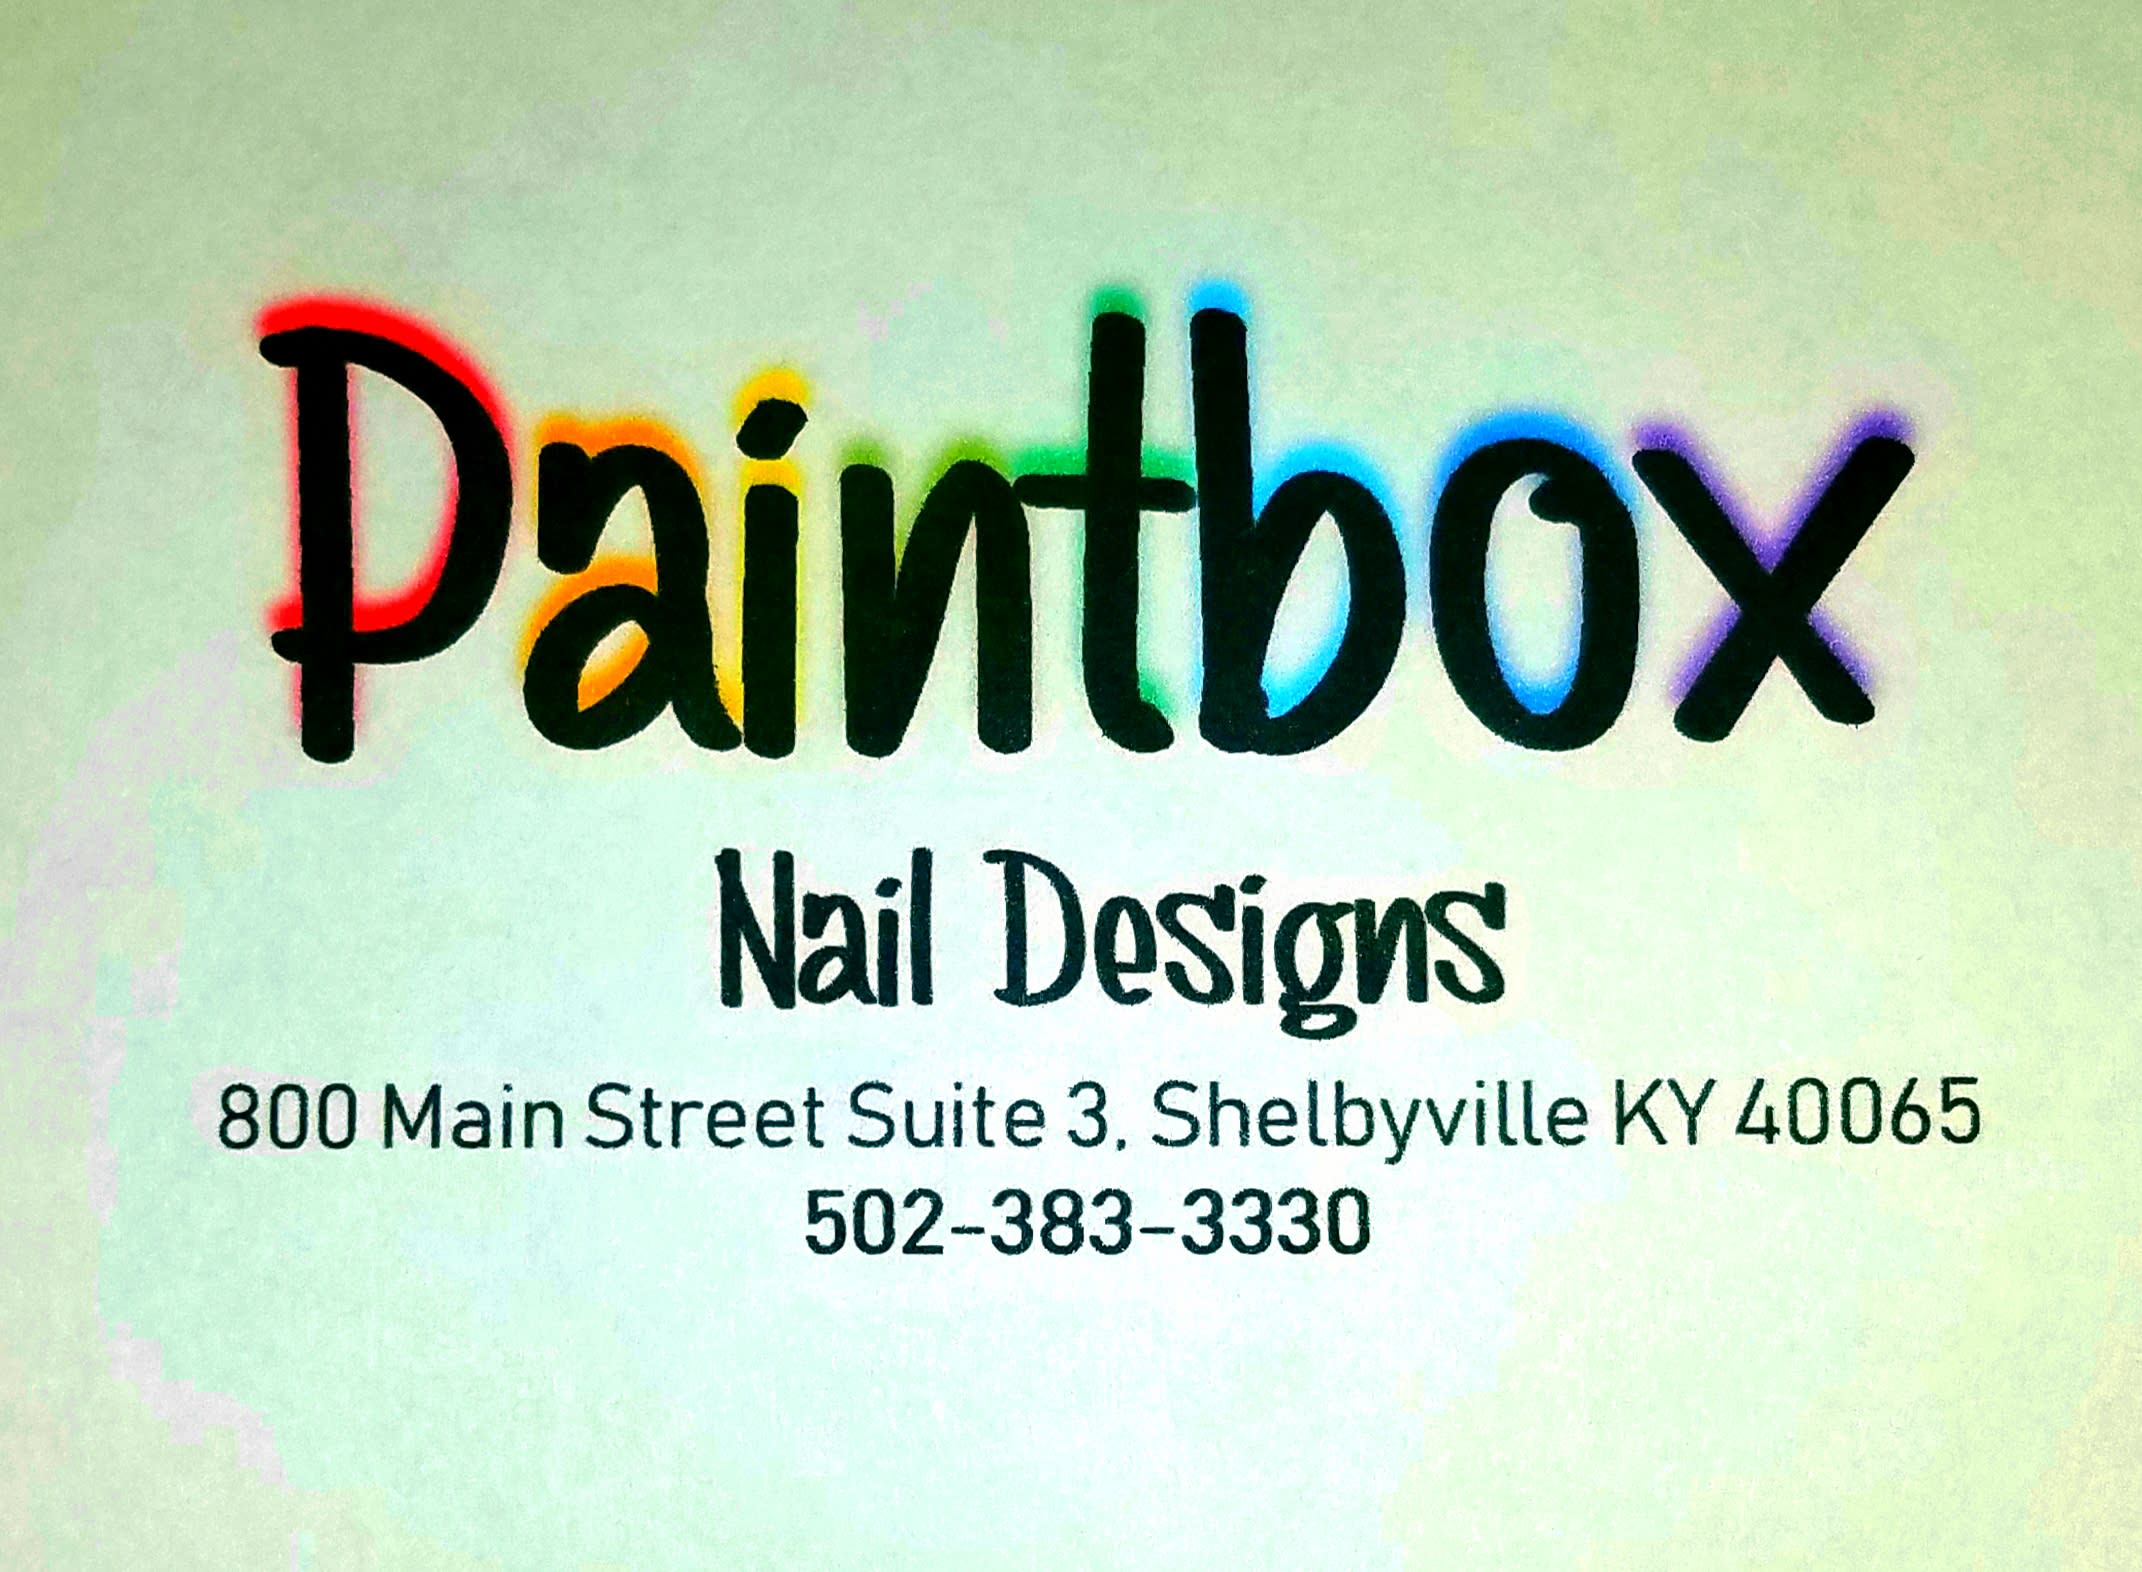 Paintbox Nail Designs